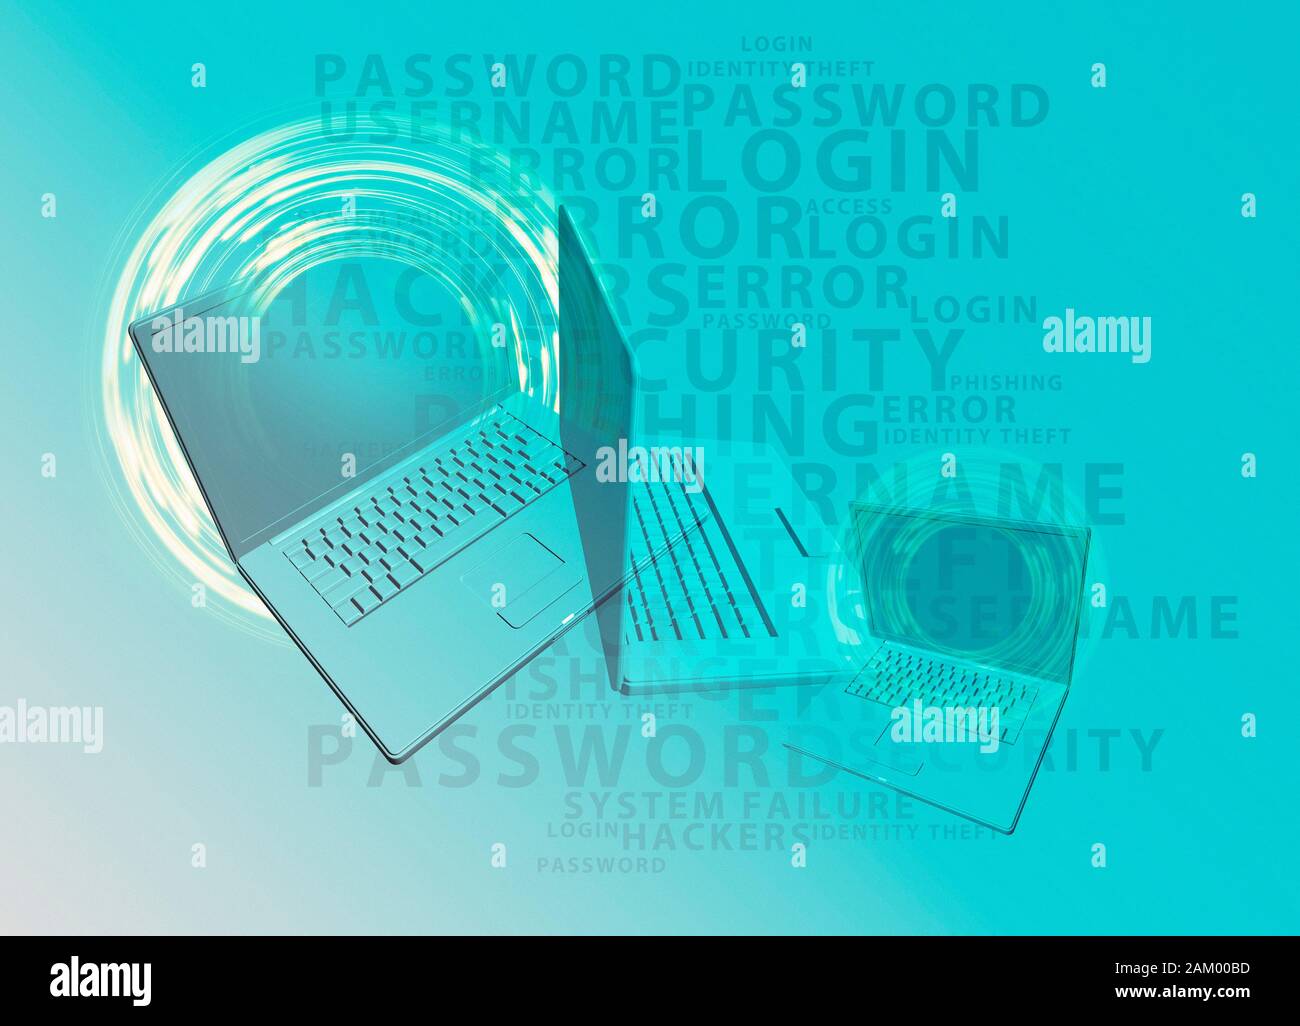 Computer security, illustration Stock Photo